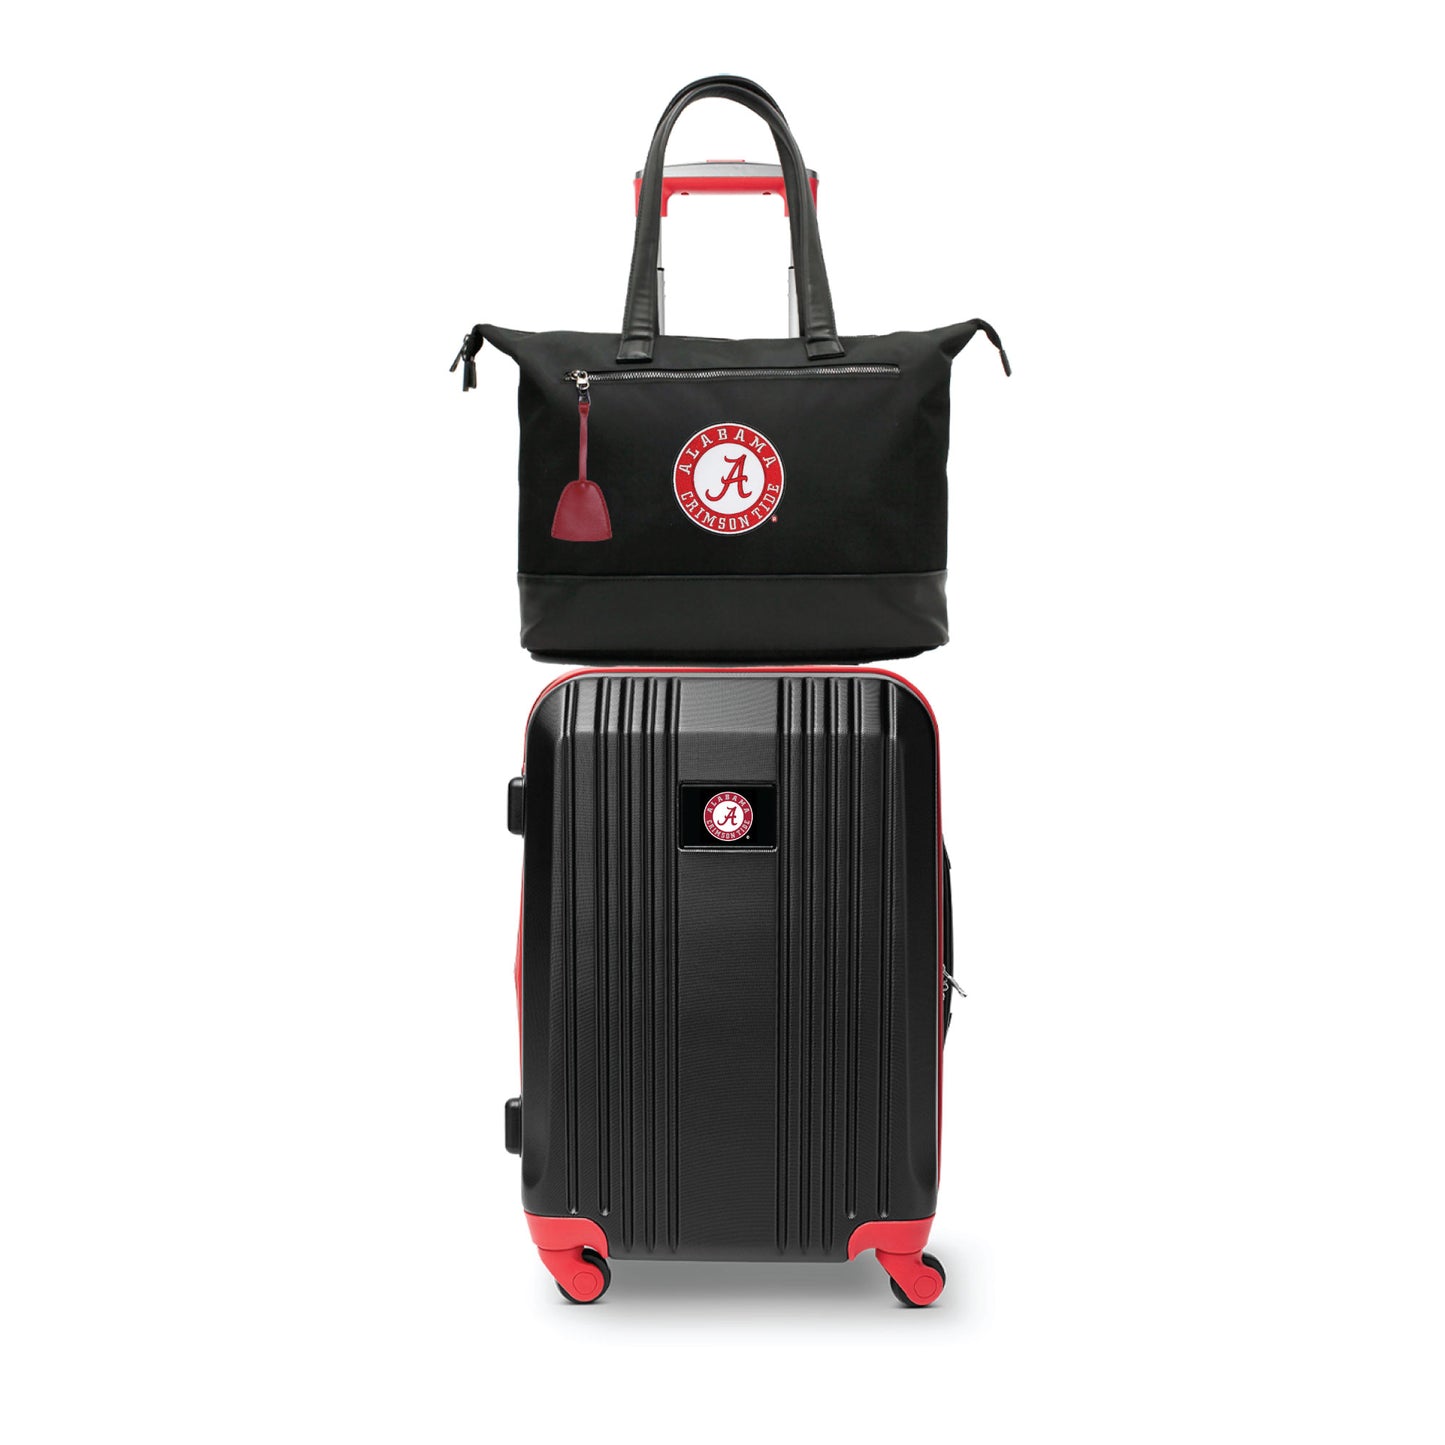 Alabama Crimson Tide Premium Laptop Tote Bag and Luggage Set